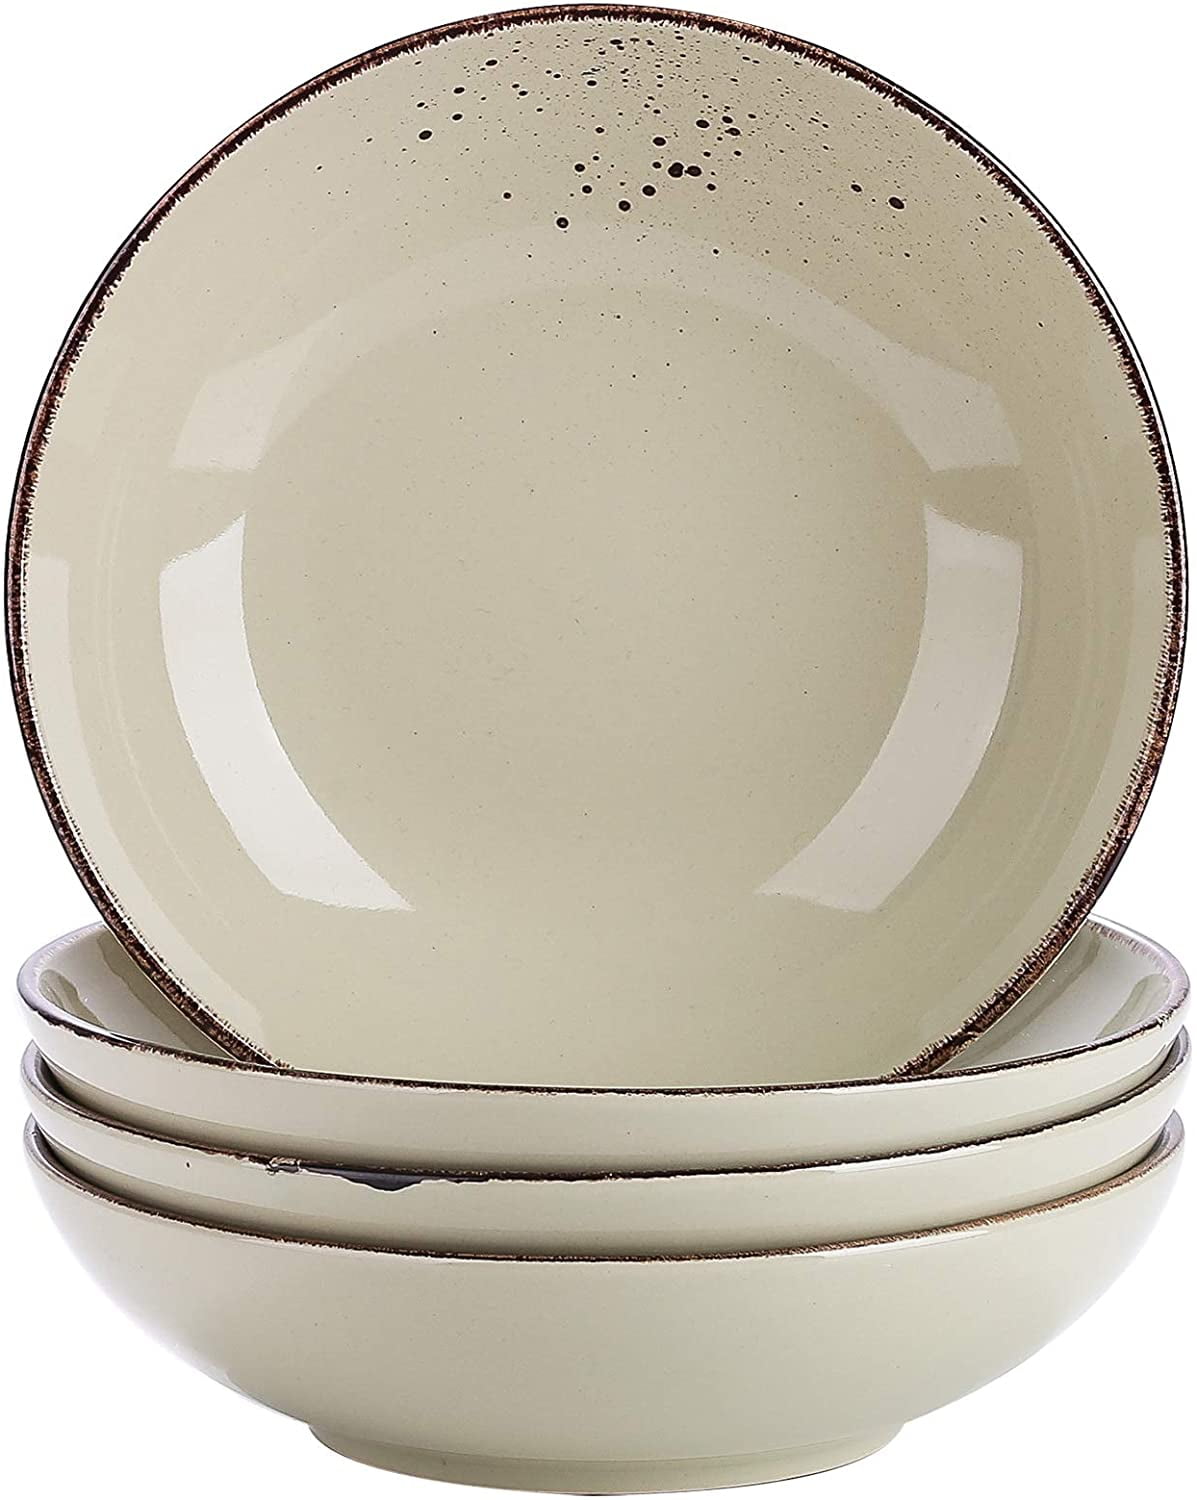 Vancasso Navia Nature 8.6 Soup Plate Porcelain Beige in Vintage Look Nature Ceramic Soup Plate Set 21.5 * 21.5 * 4.5cm Set of 4 